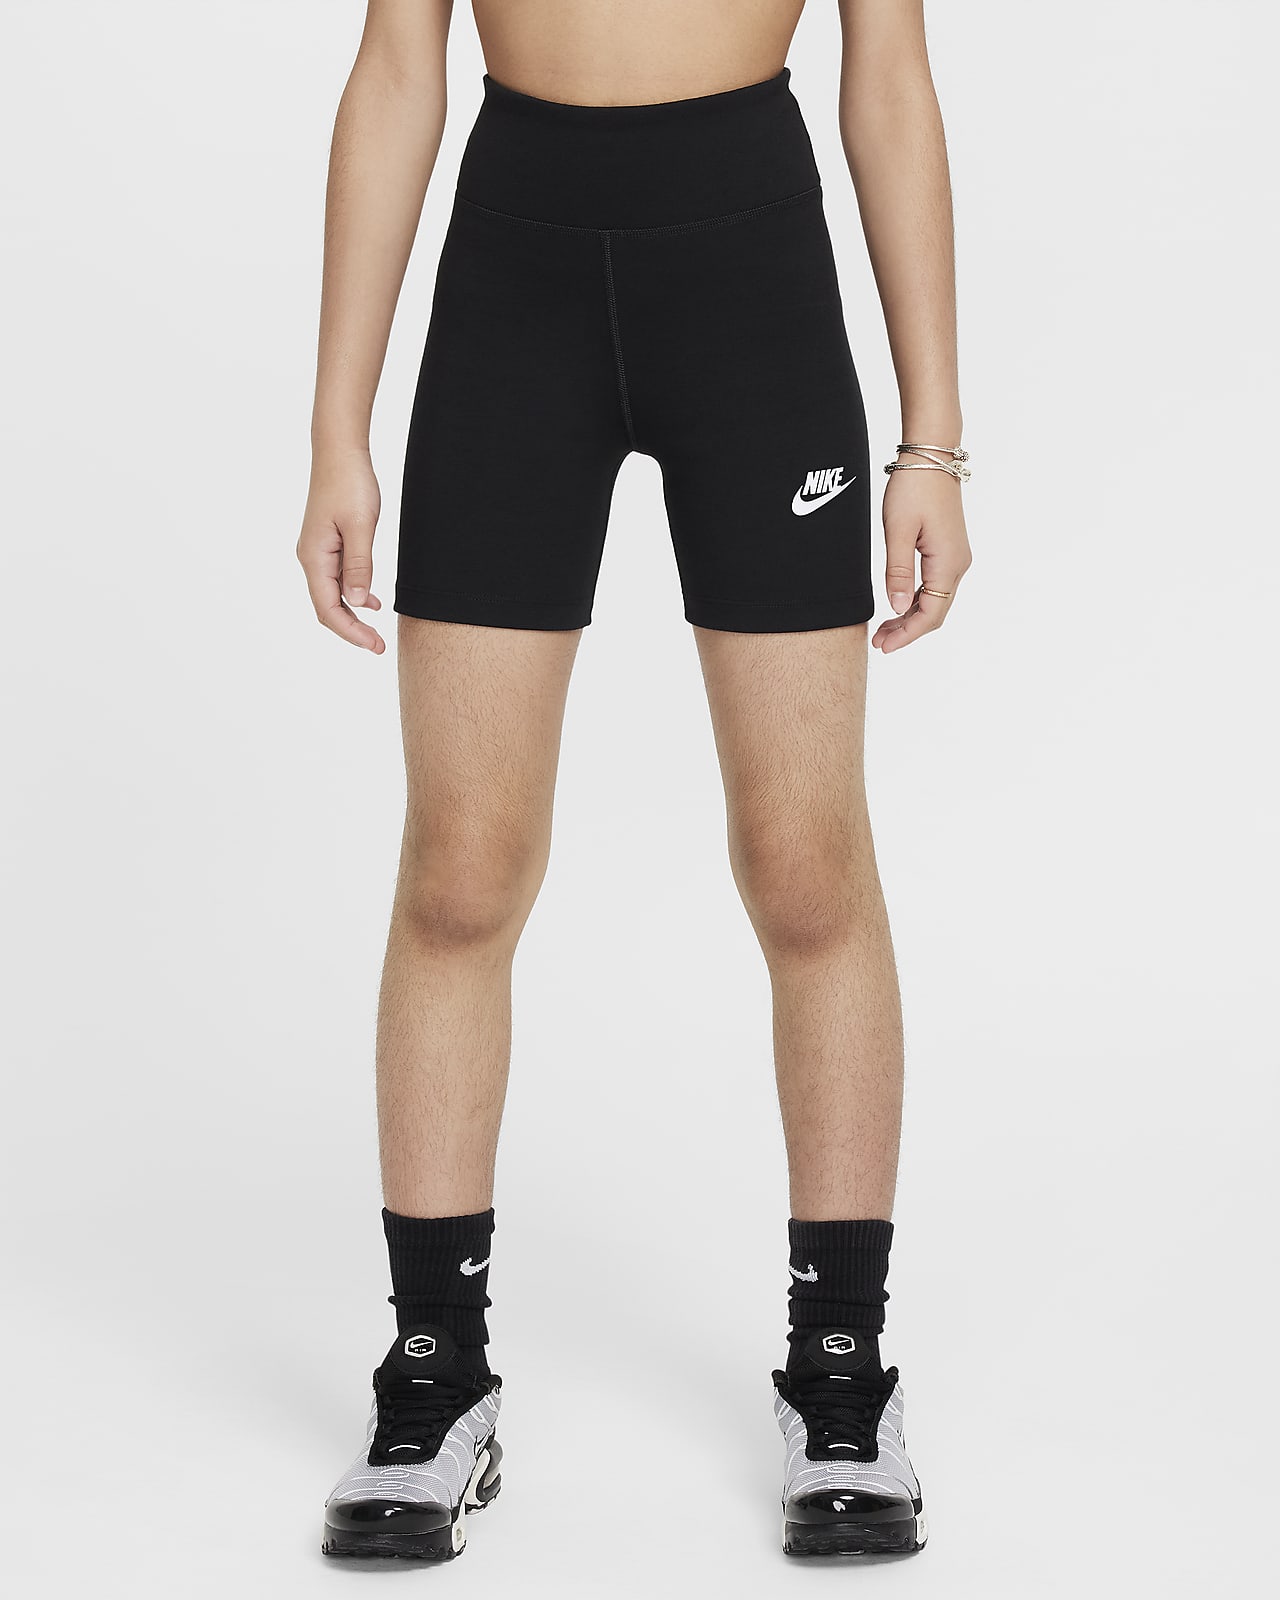 Cycliste taille haute 13 cm Nike Sportswear Classic pour fille